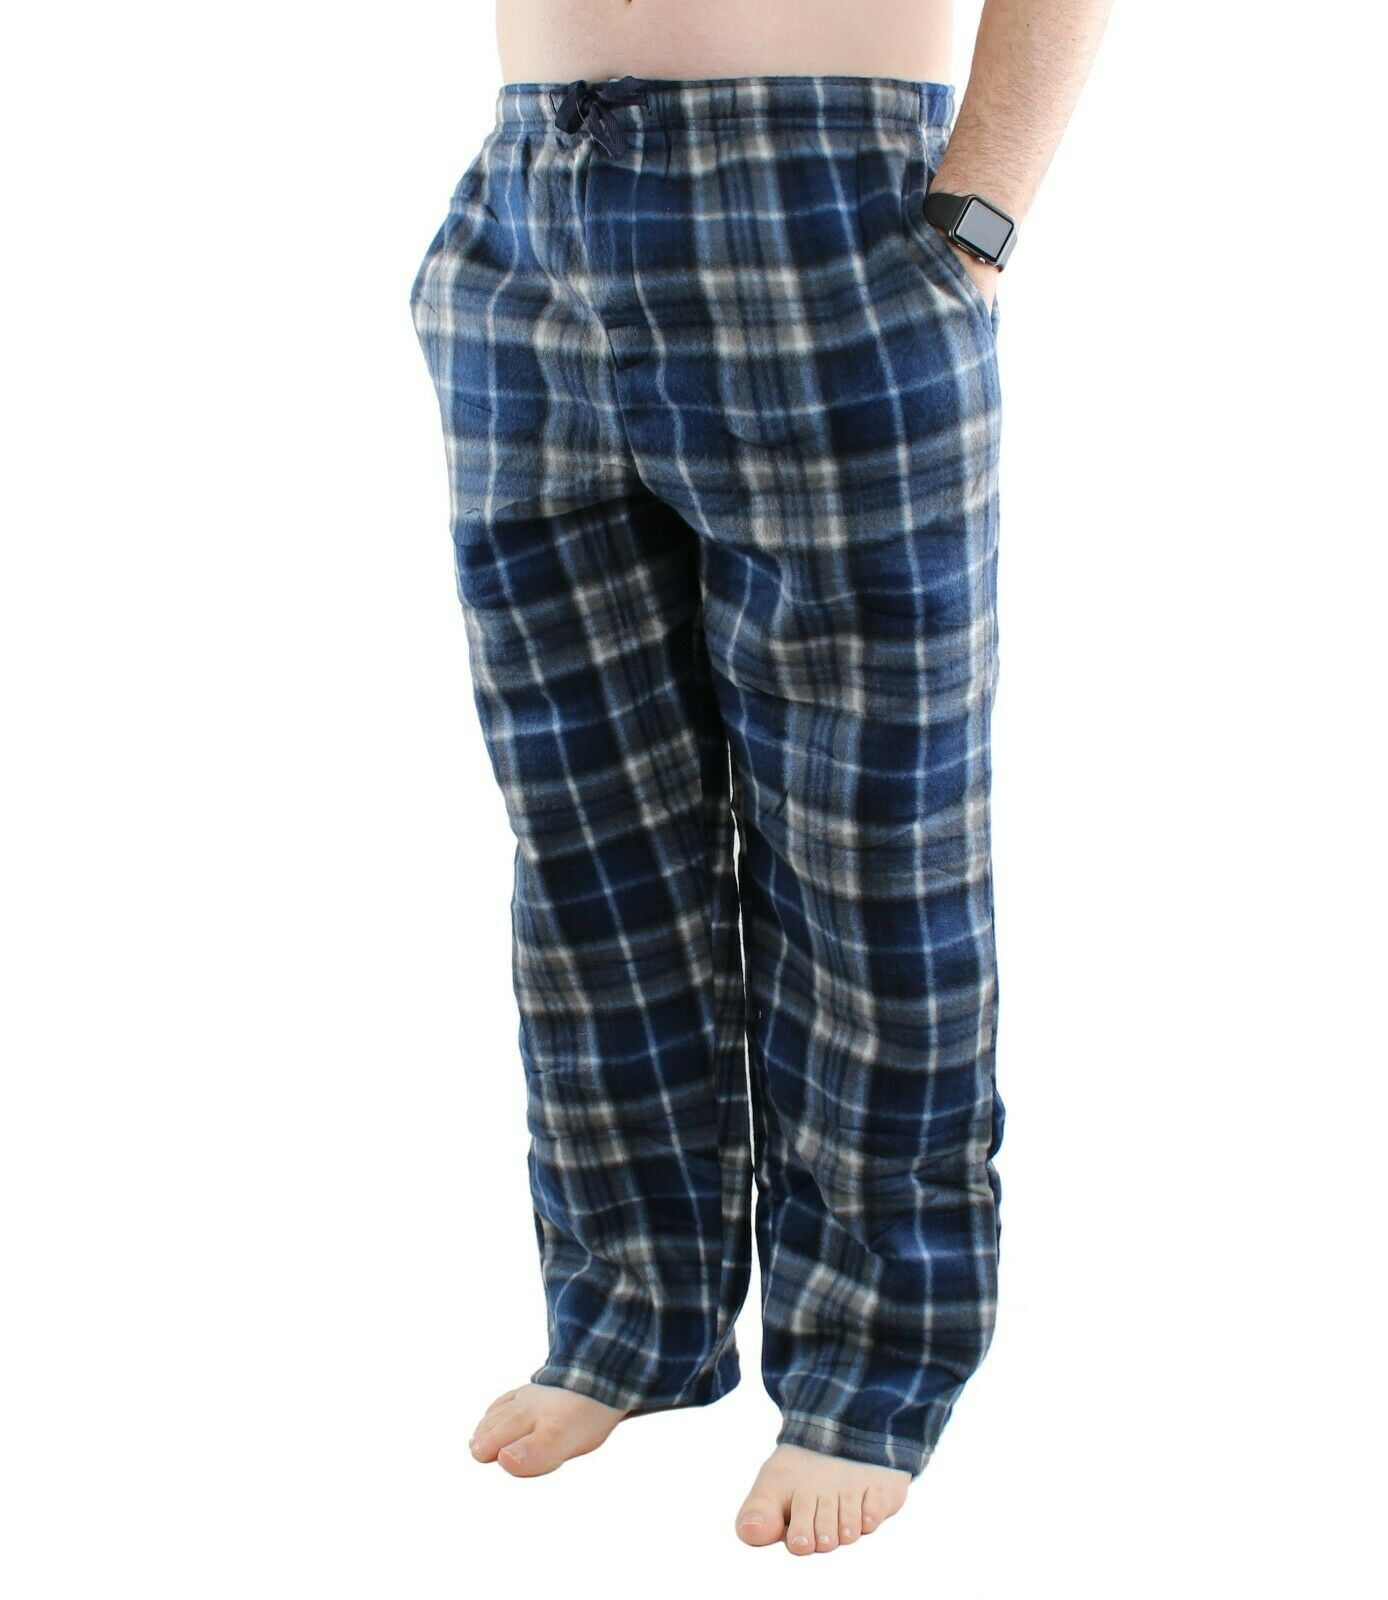 Comfy Lifestyle - Comfy Lifestyle Men's Plaid Fleece Soft Warm Pajama ...